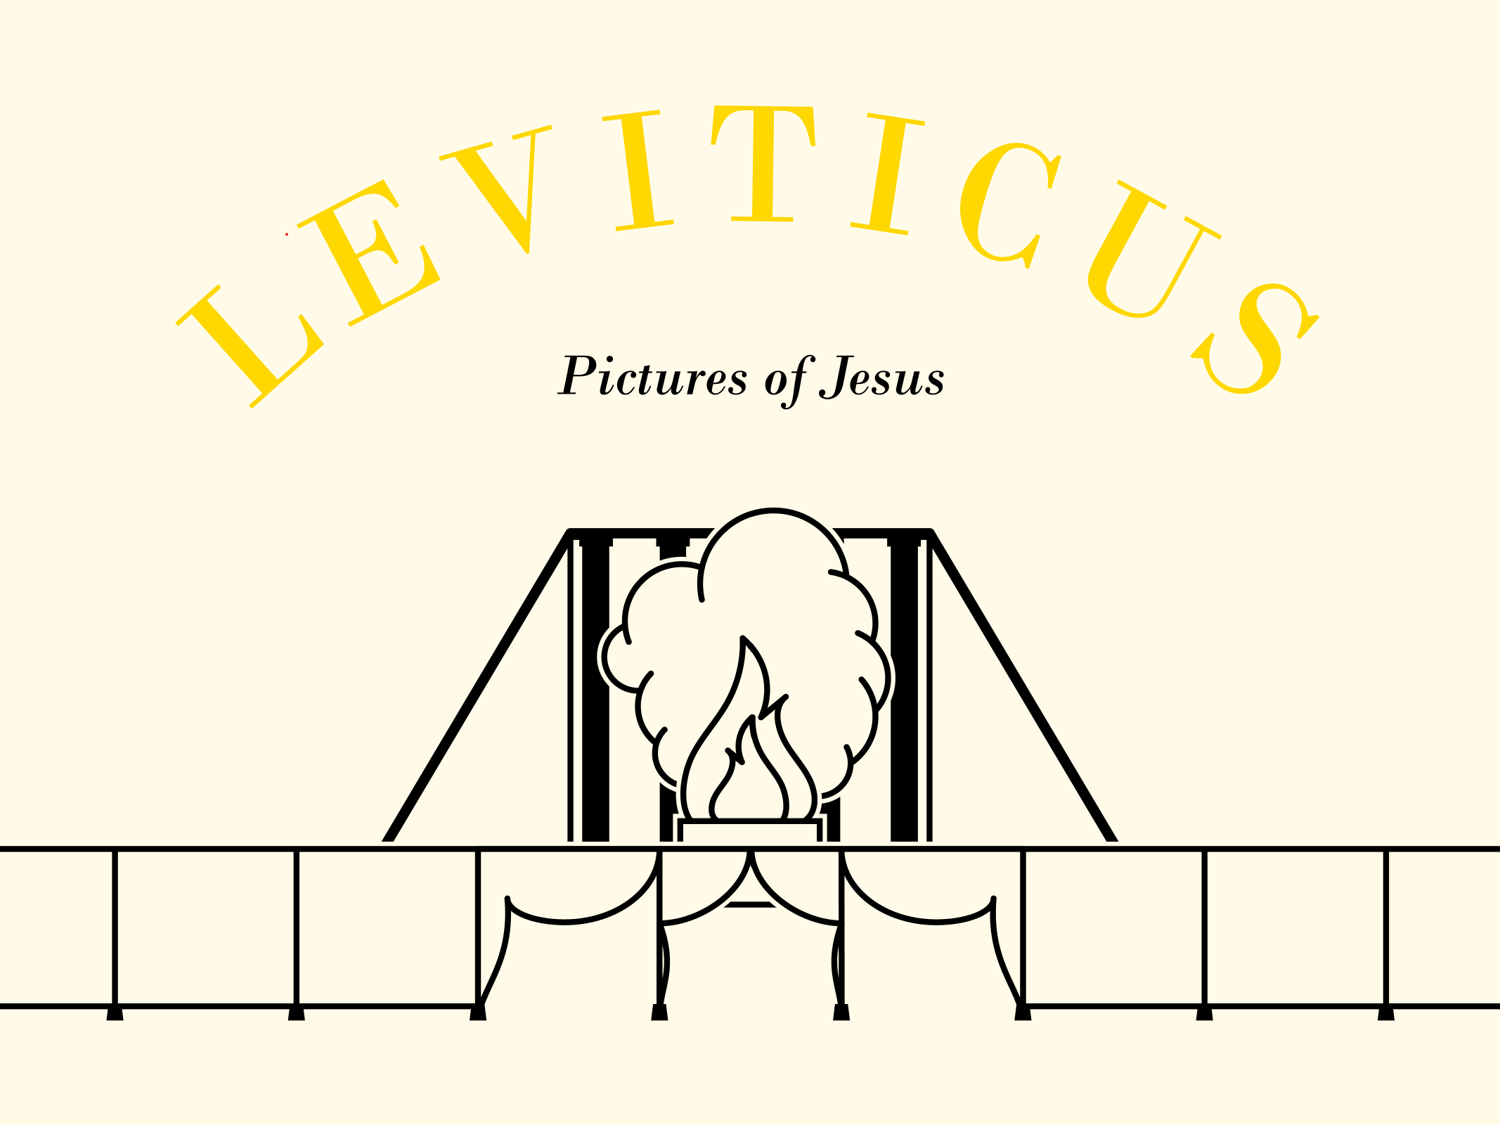 Leviticus.png